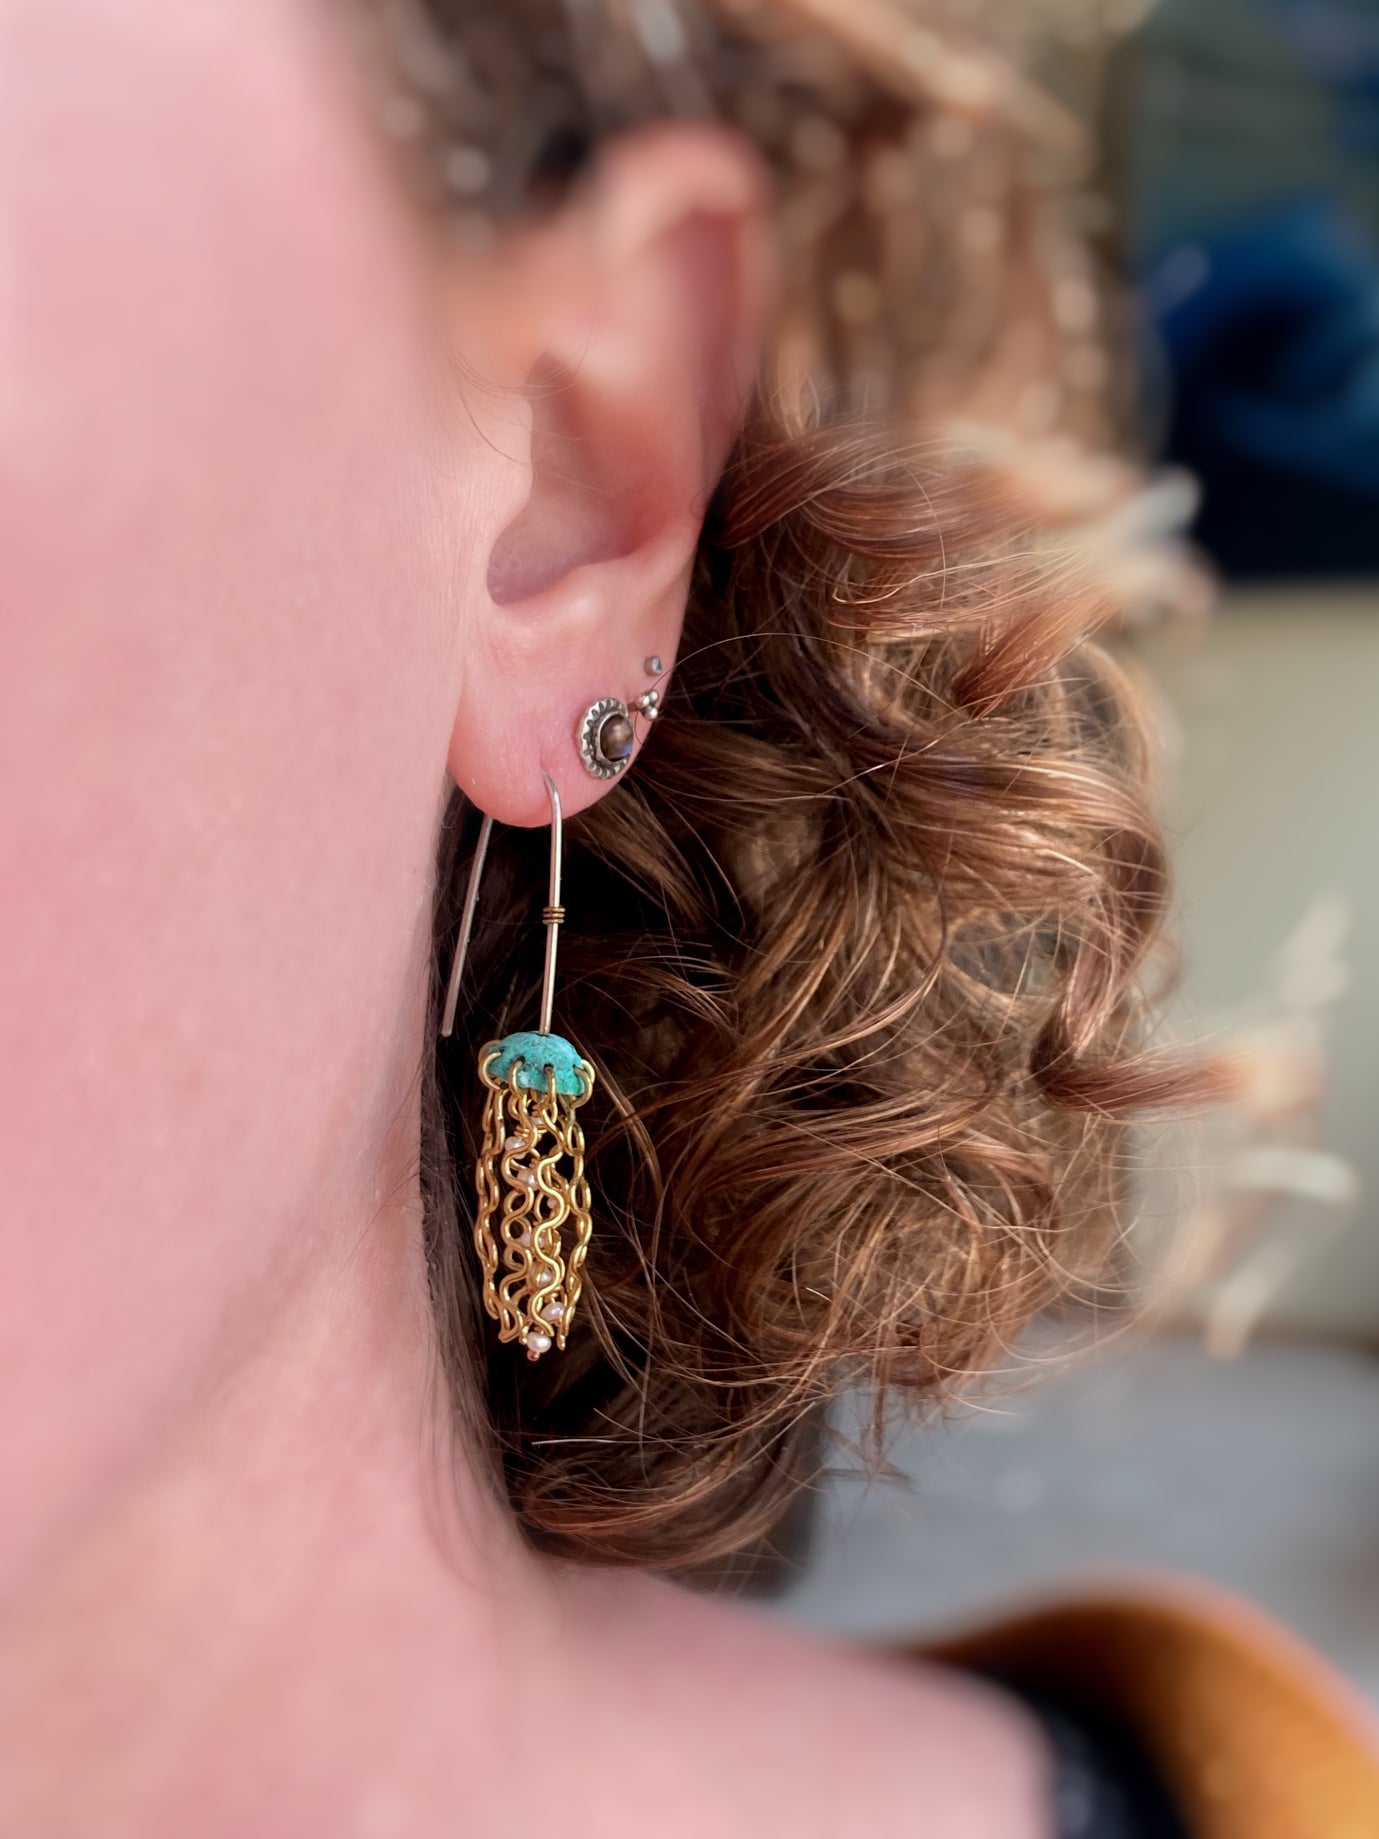 Mini jellyfish earrings